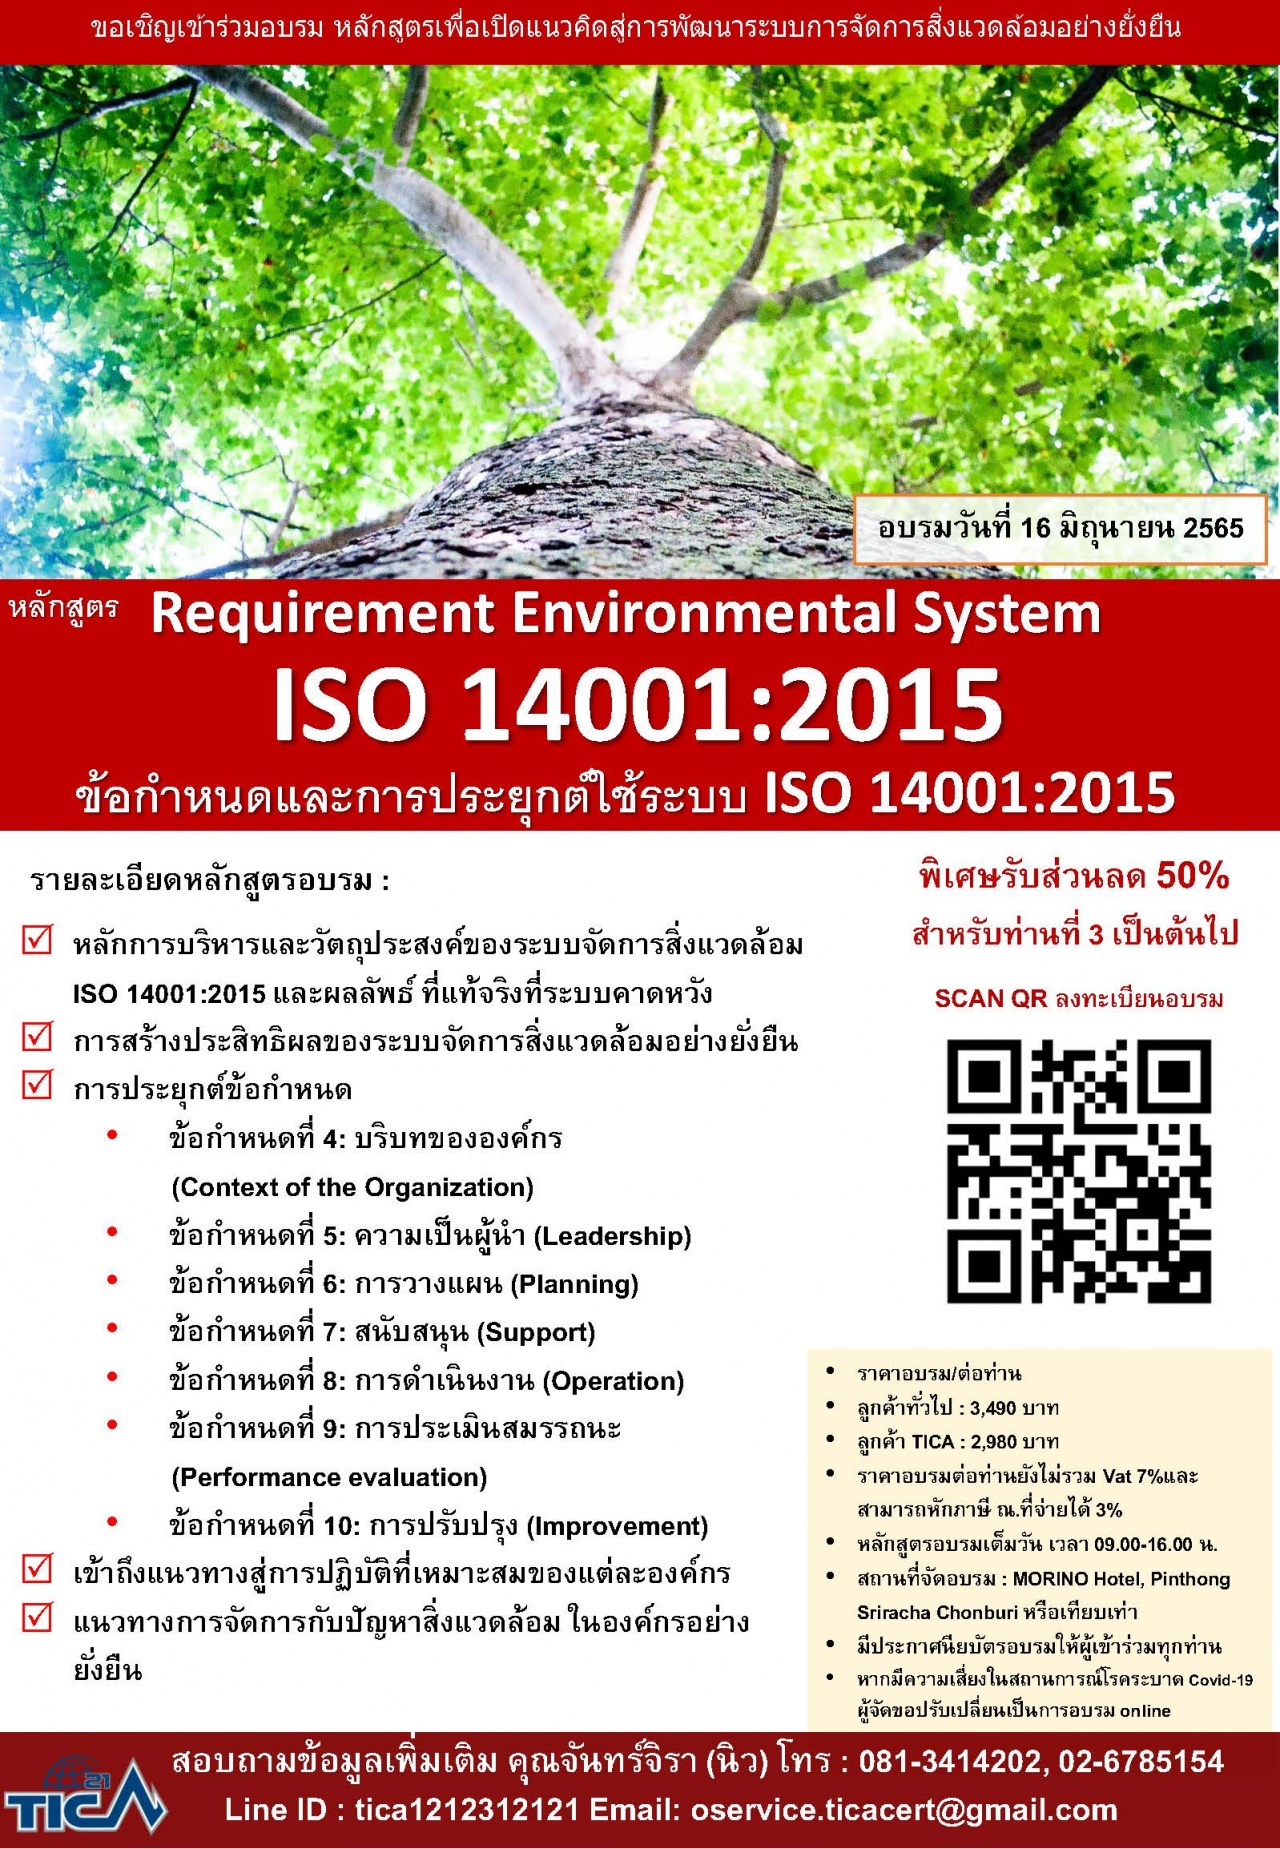 ISO 14001:2015 Requirement Environmental System ข้อกำหนดและกำรประยุกต์ใช้ระบบ ISO 14001:2015